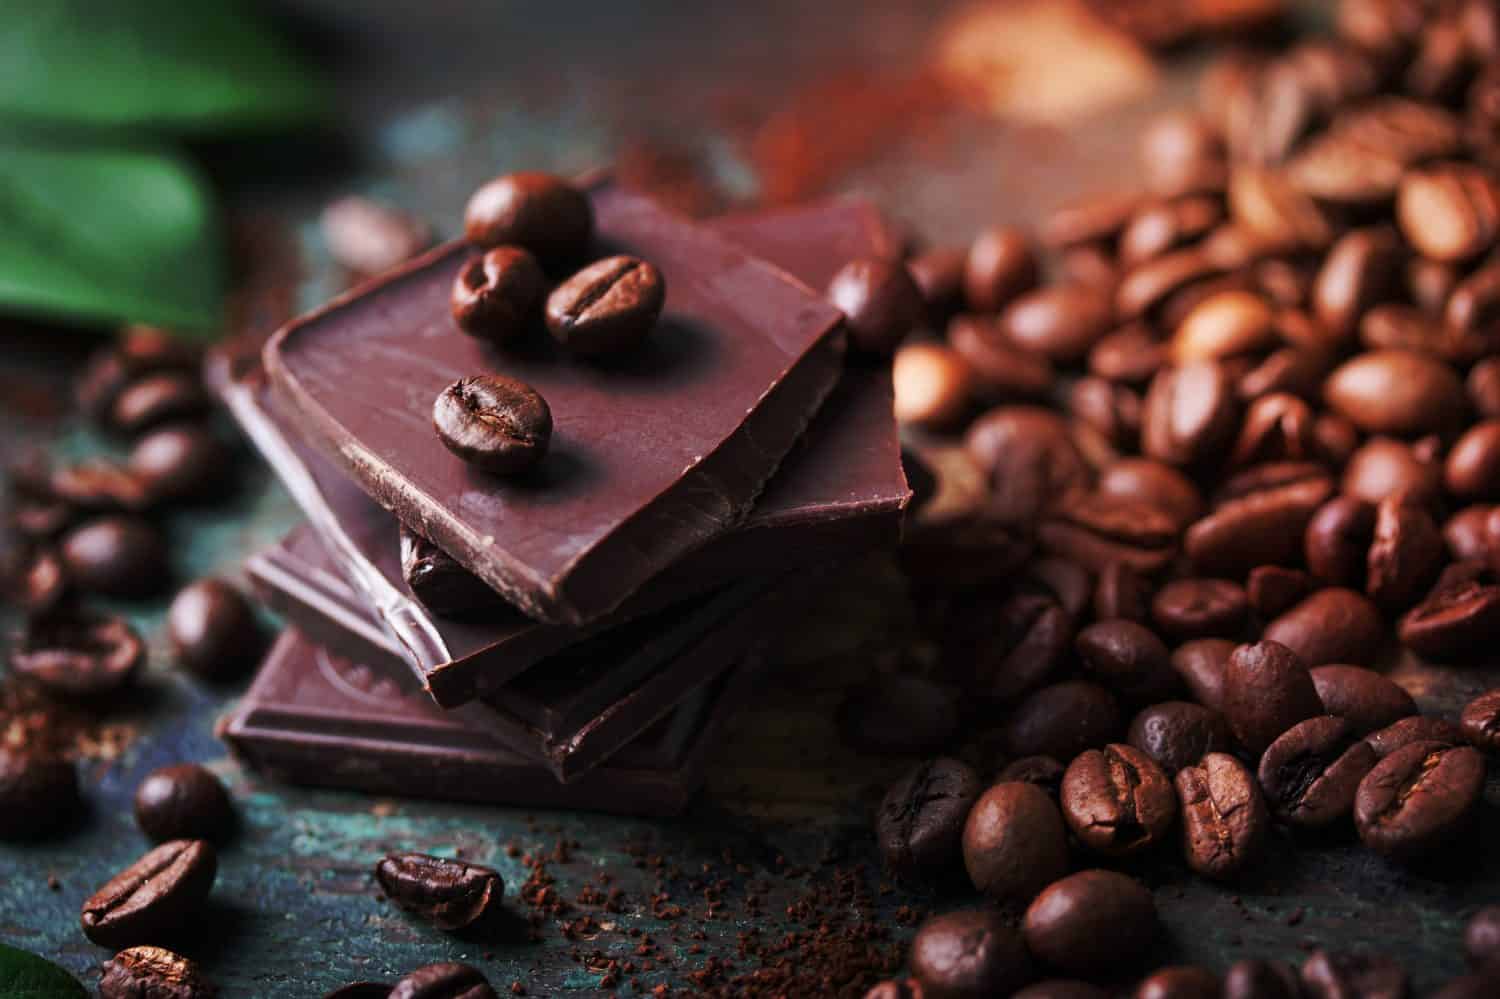 Coffee i chocolate. Какао шоколад. Кофейные зерна. Кофе в зернах. Шоколадные кофейные зерна.